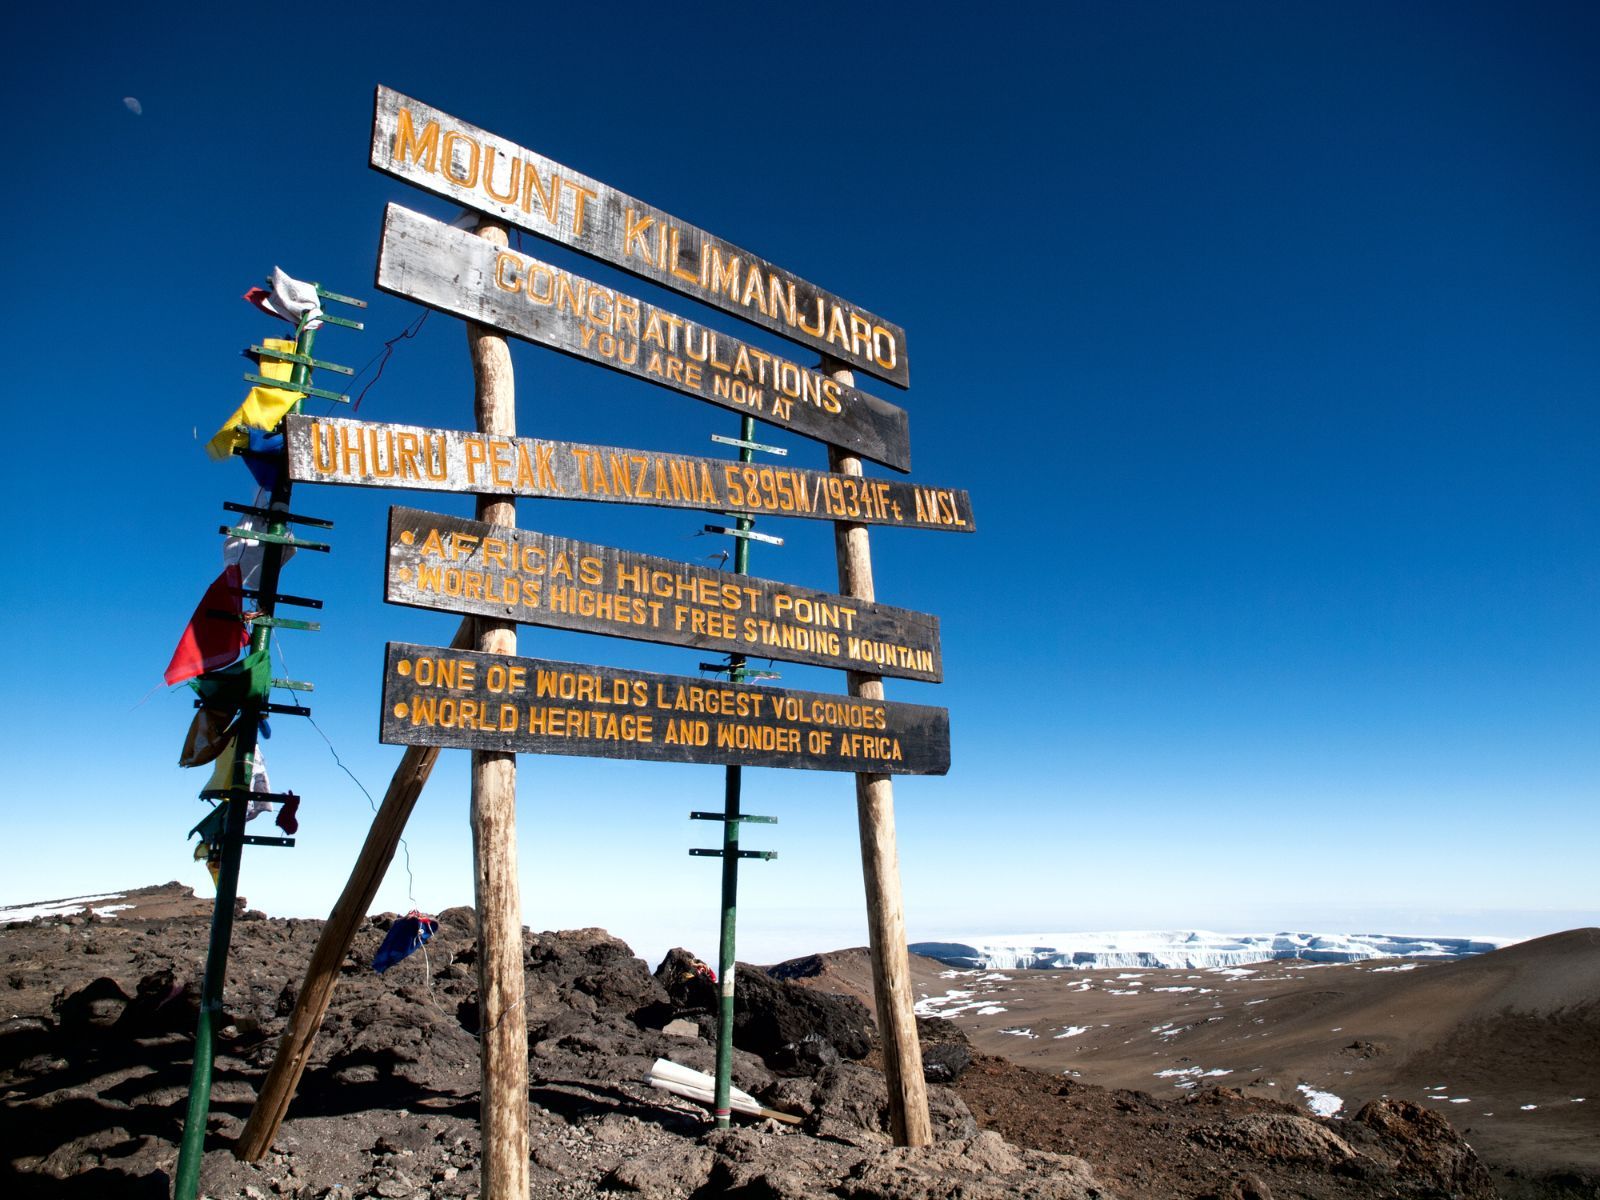 The famous Mount Kilimanjaro summit sign